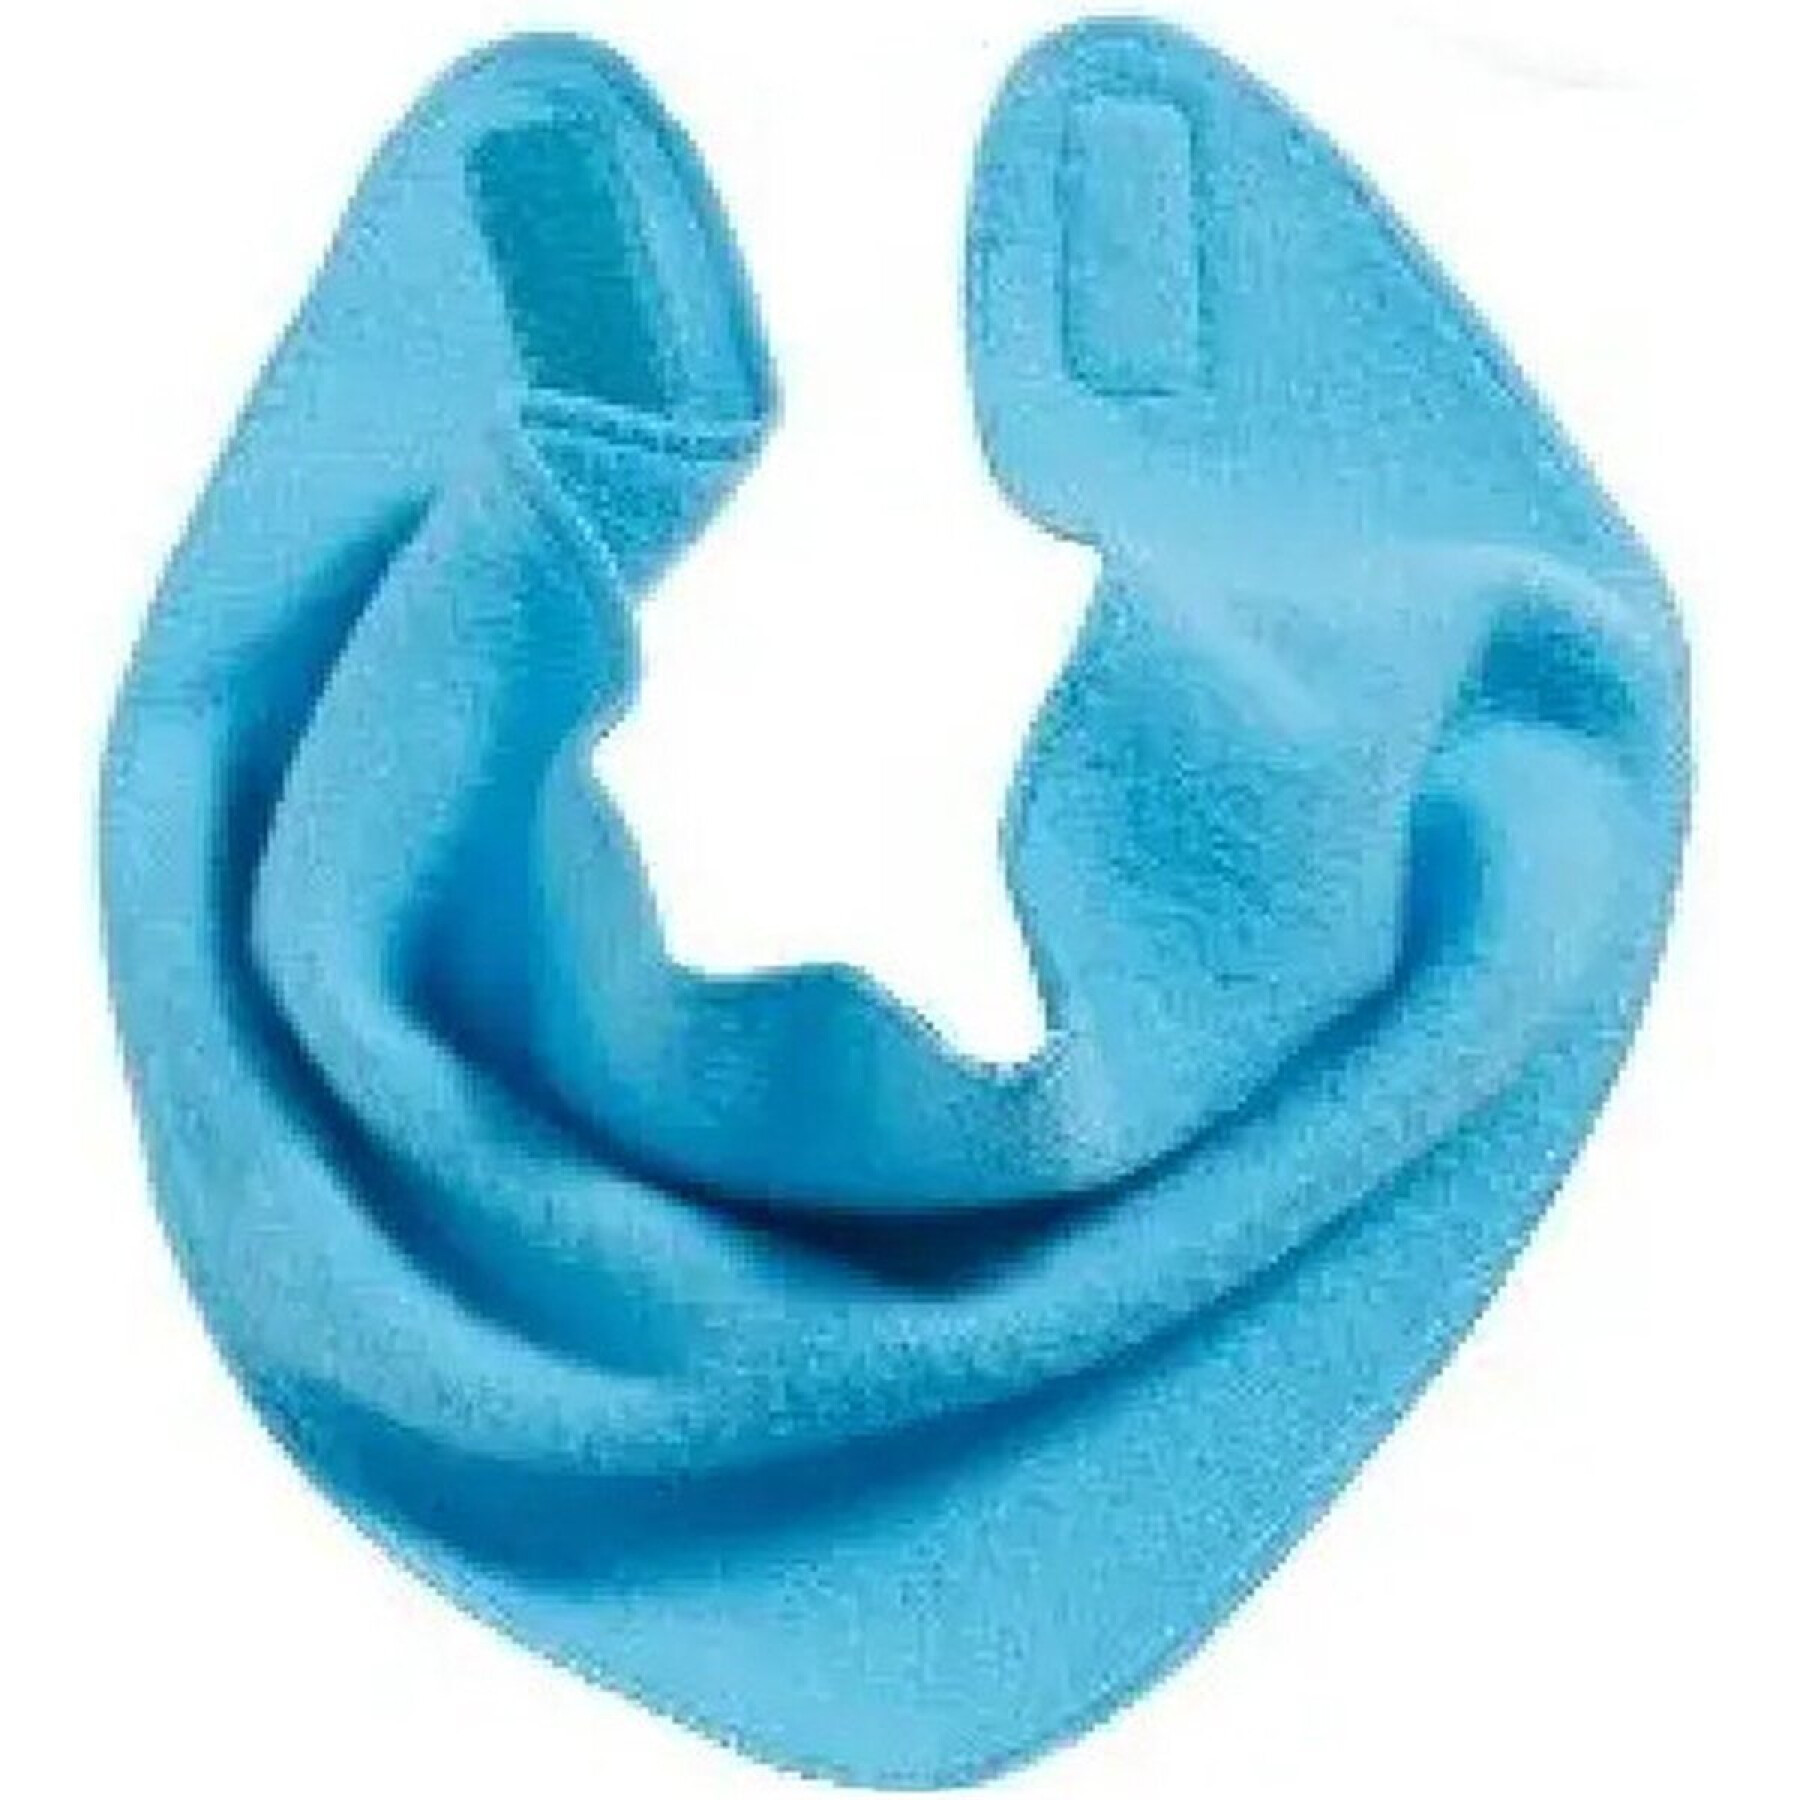 children's fleece triangle scarf Playshoes